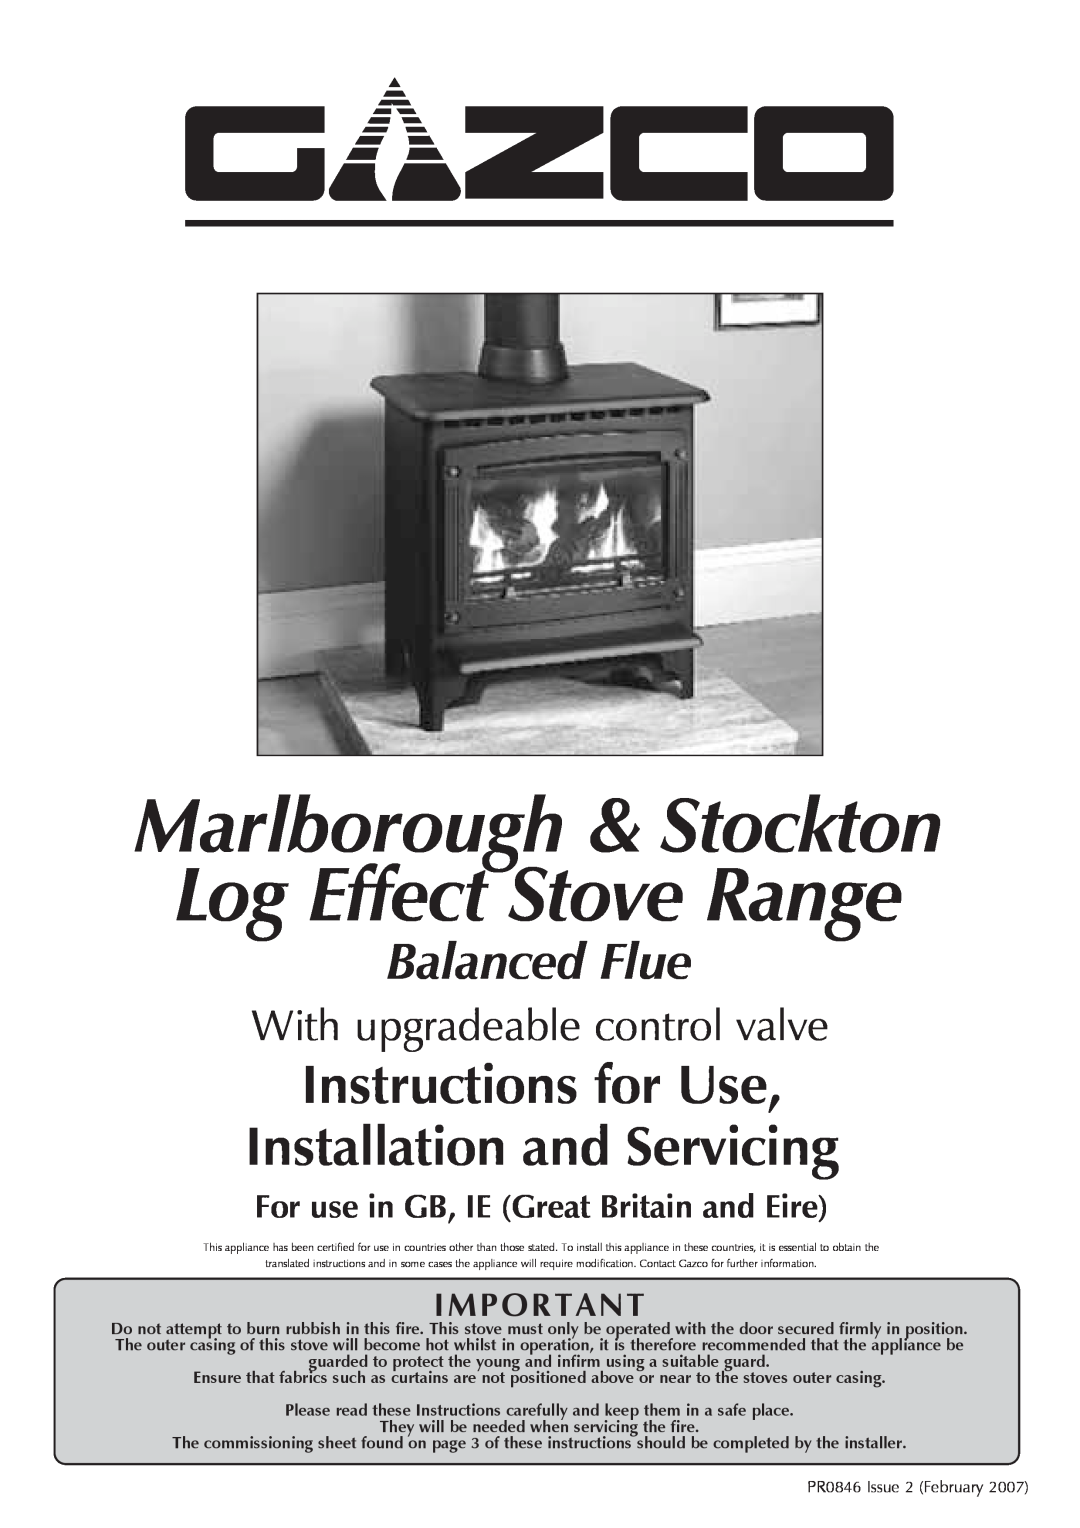 Stovax manual Marlborough & Stockton Log Effect Stove Range, Instructions for Use Installation and Servicing 